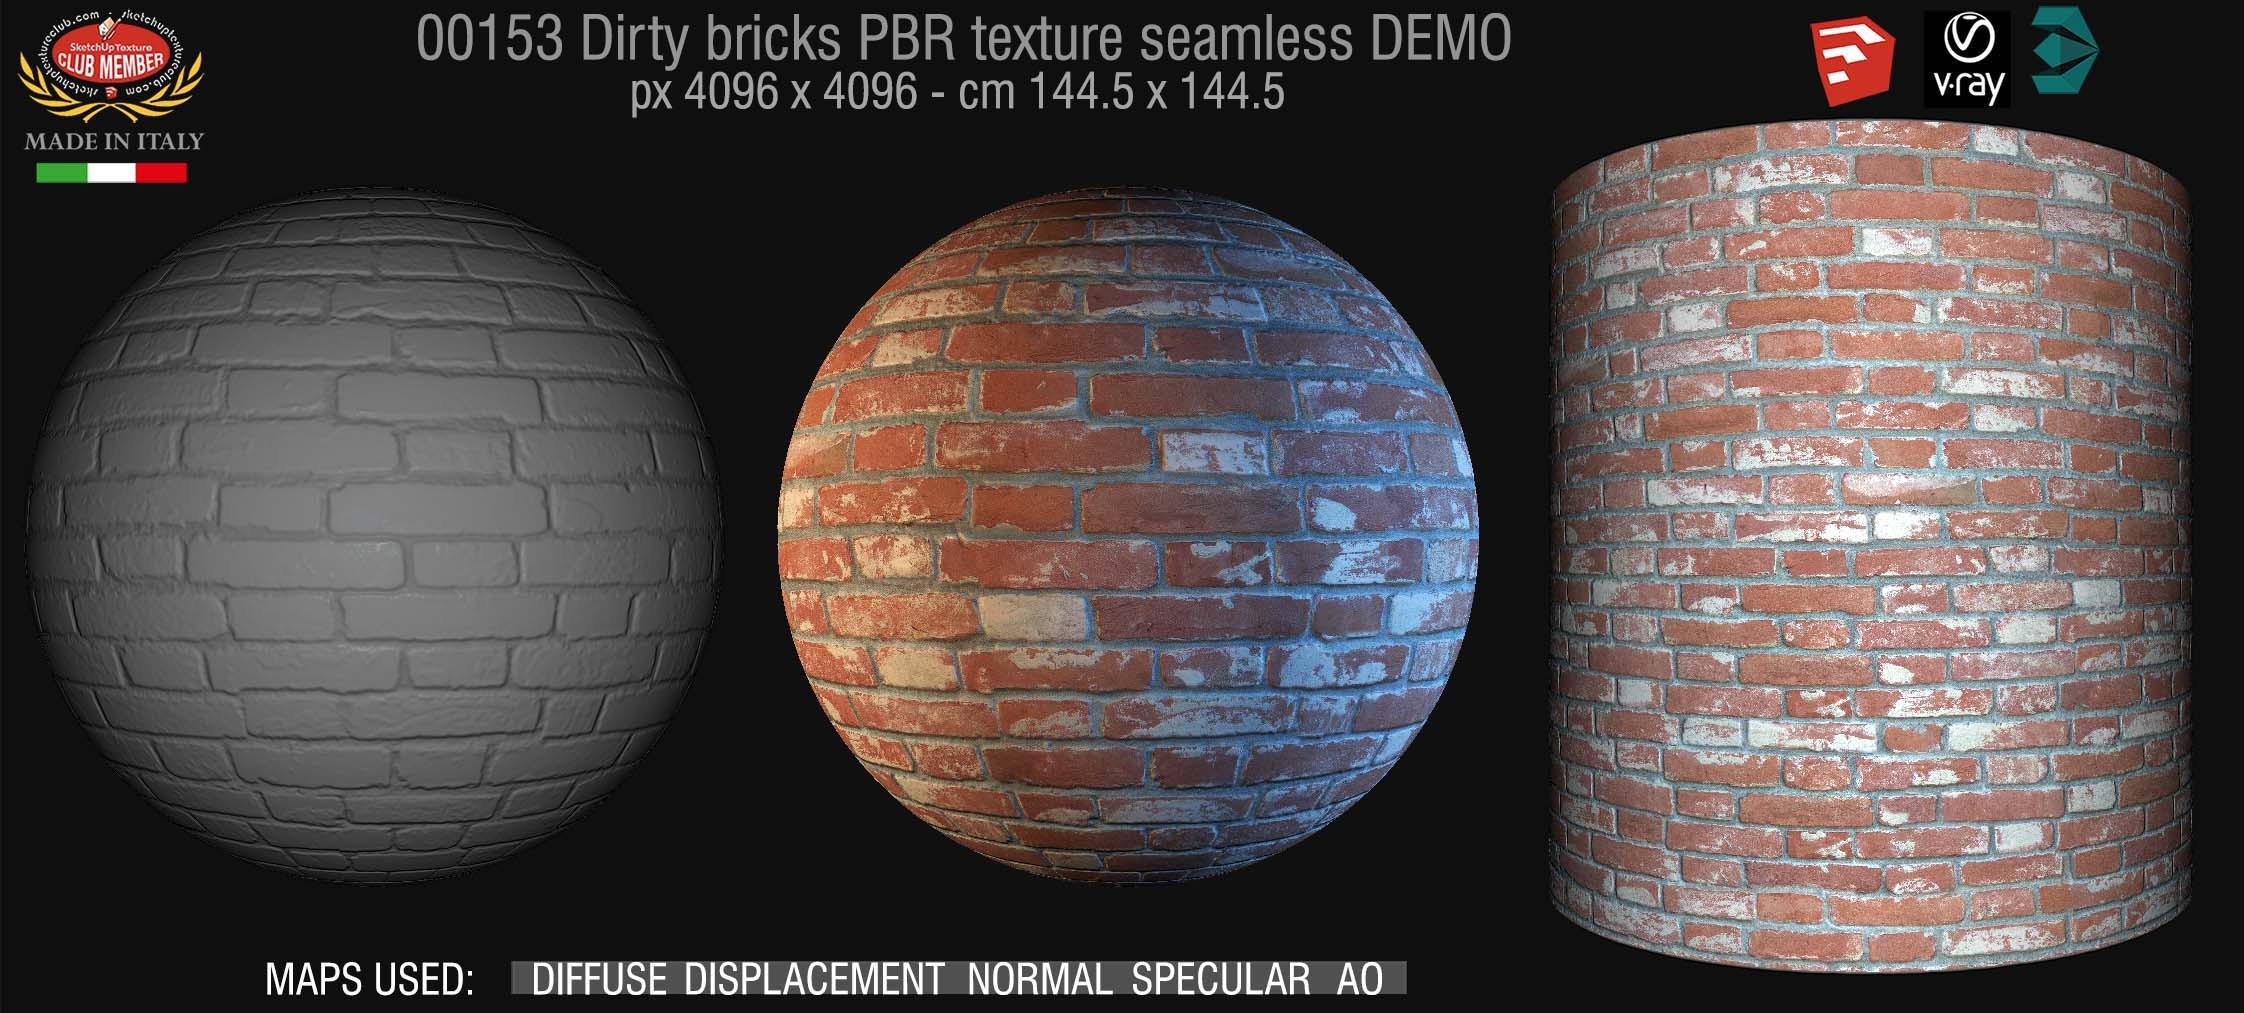 00153 Dirty bricks PBR texture seamless DEMO